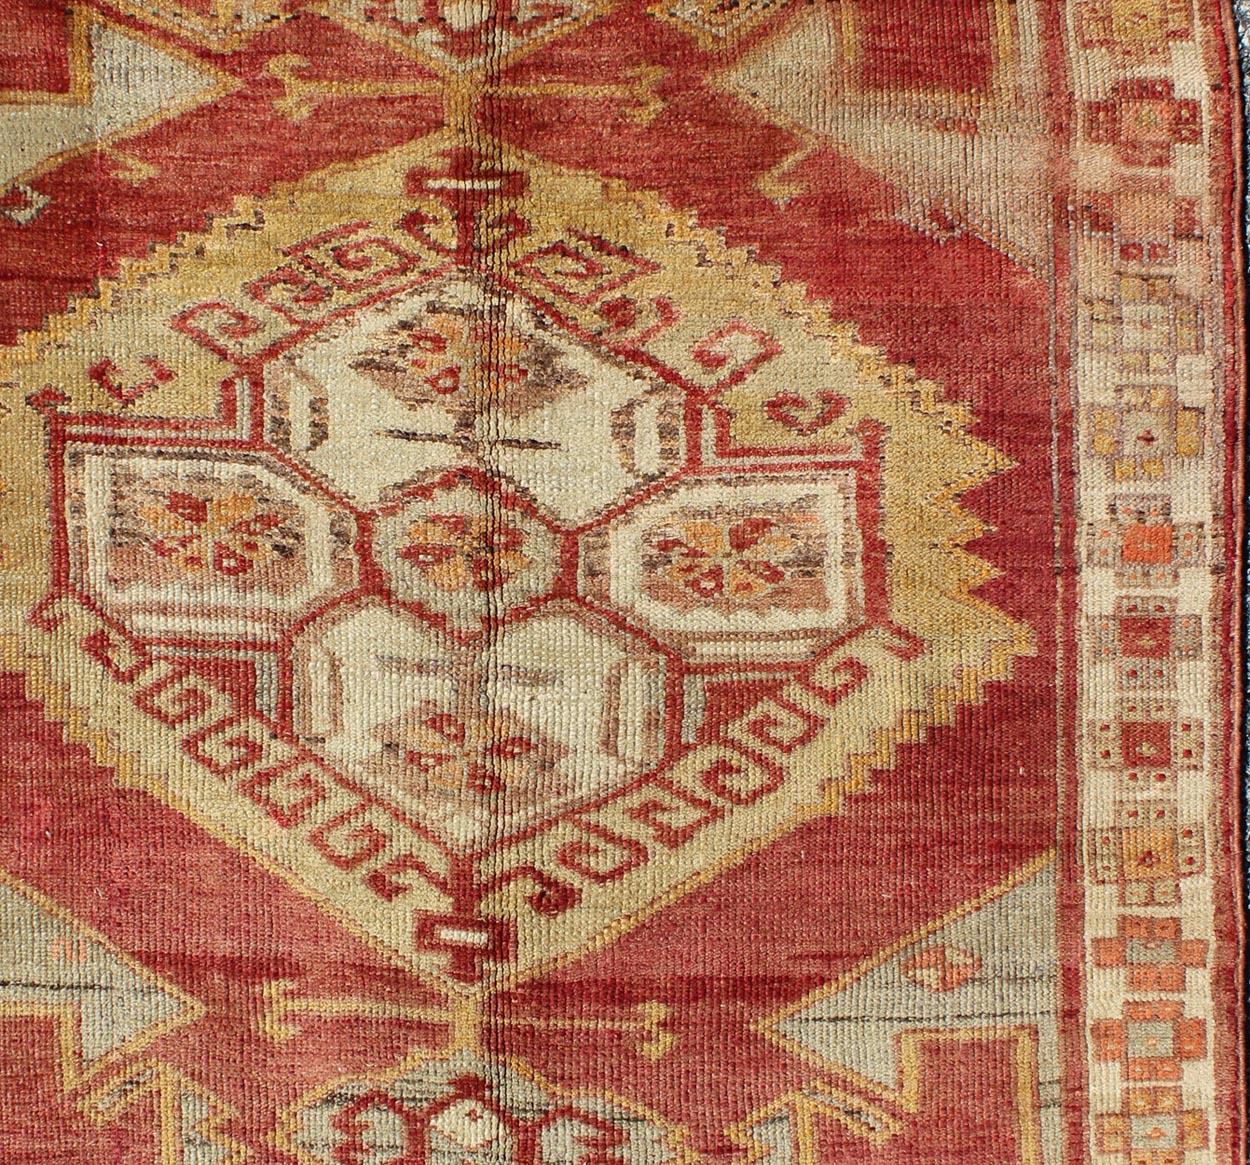 Square Turkish Oushak with Medallion Design. Vintage Oushak carpet from Turkey in square size, Keivan Woven Arts/ rug TU-UGU-38, country of origin / type: Turkey / Oushak, circa 1940

Measures: 3'10 x 4'2

This vintage Turkish Oushak rug is rendered